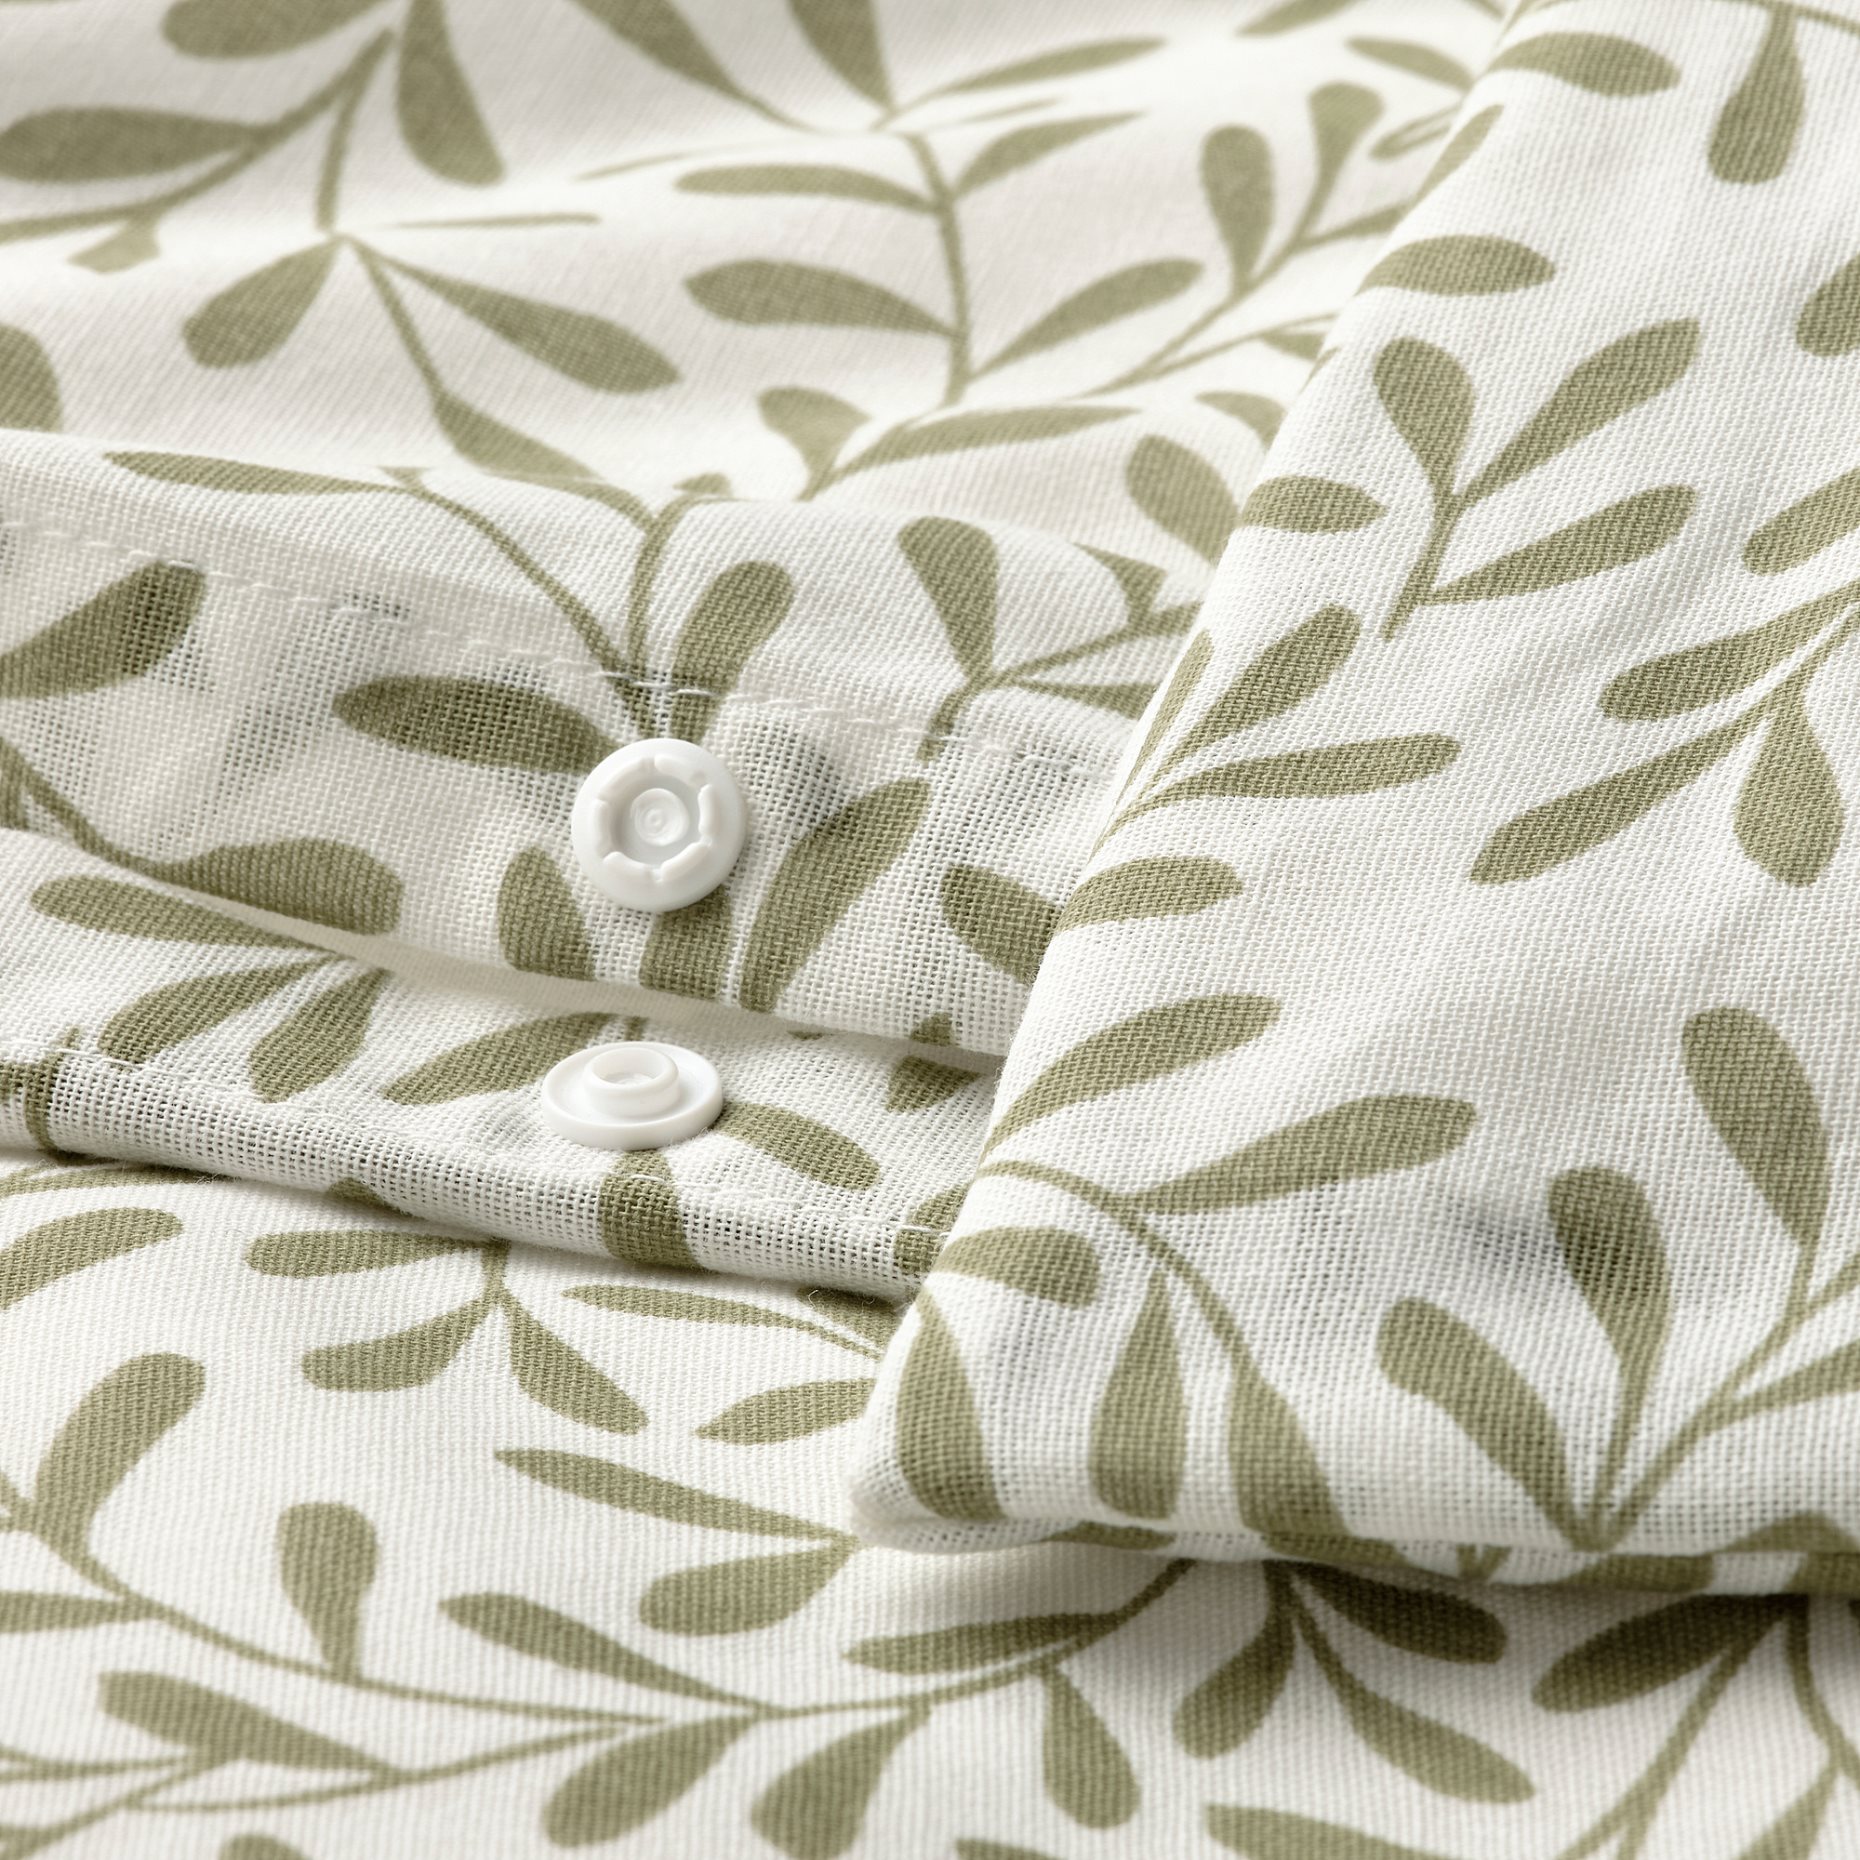 SORGMANTEL, duvet cover and 2 pillowcases, 240x220/50x60 cm, 805.494.82